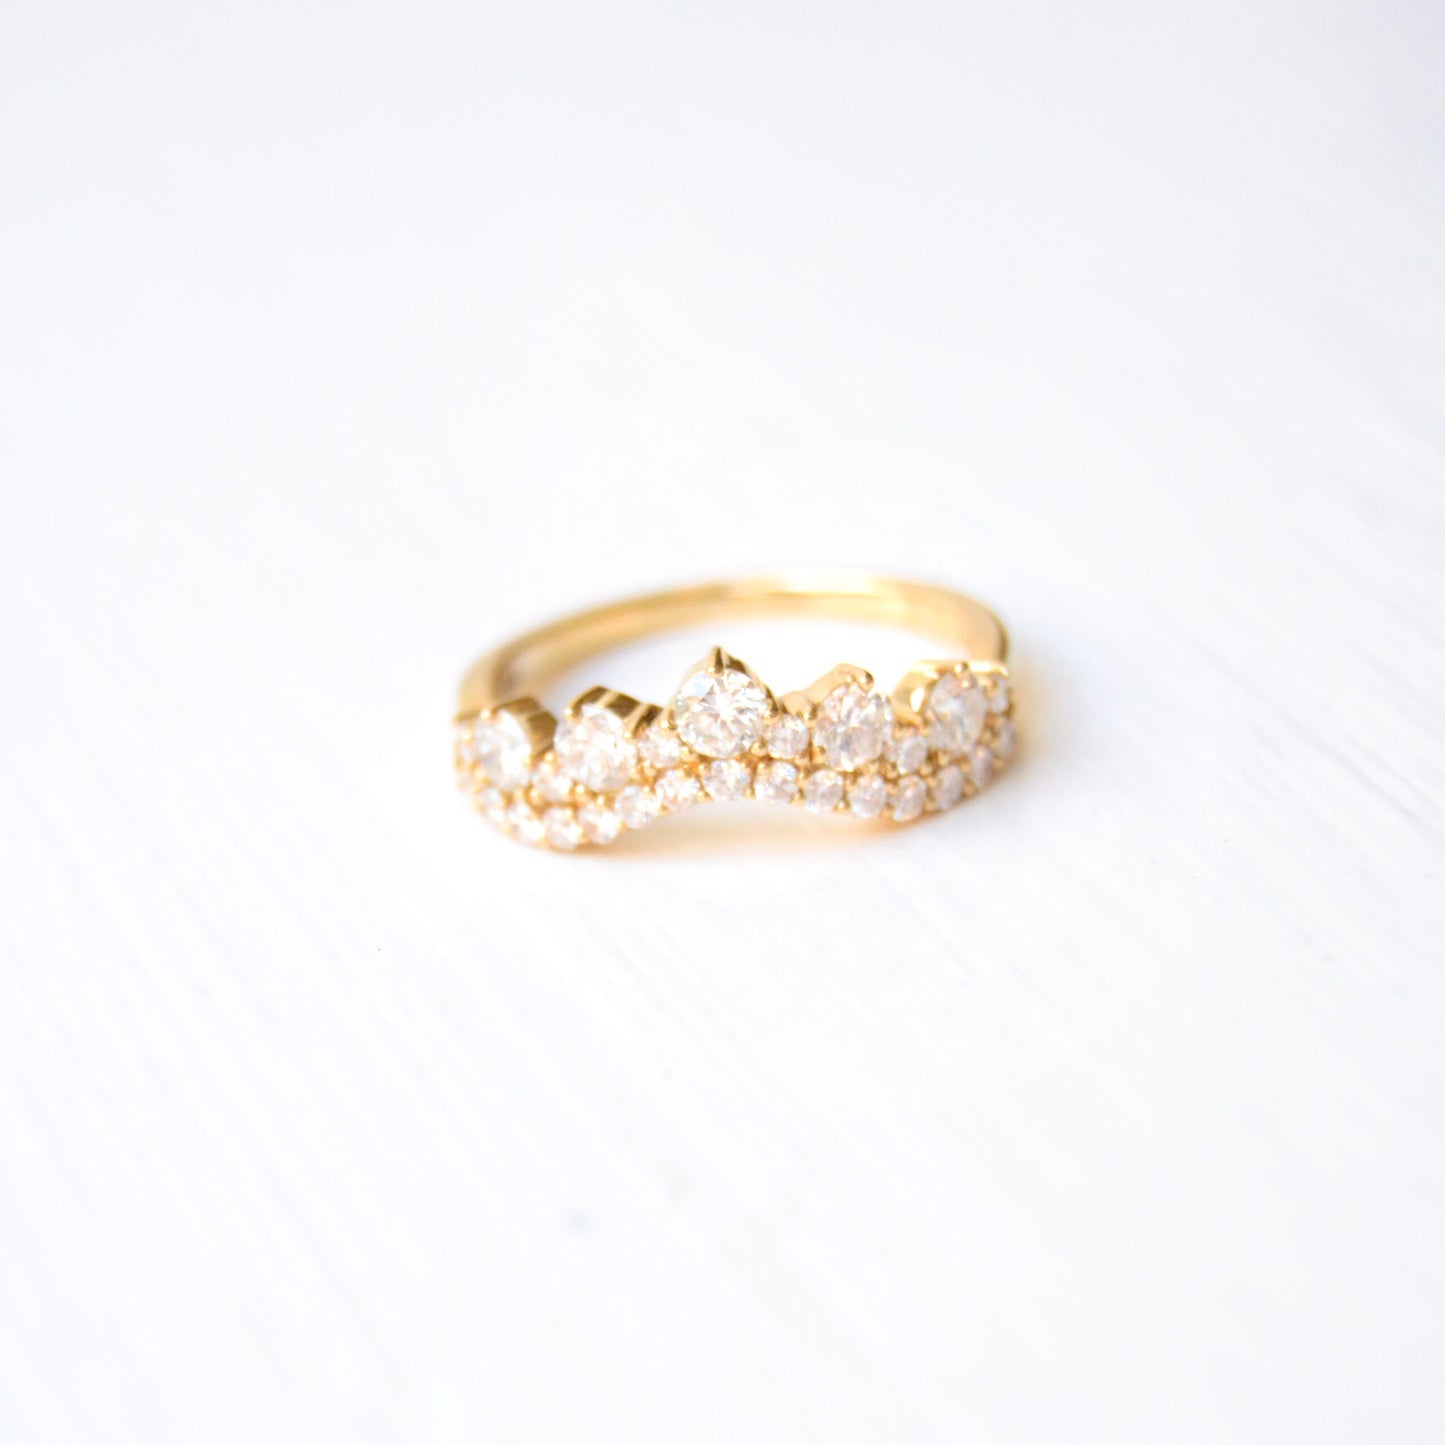 Josephine Diamond Ring - 14 Karat Gold White Diamond